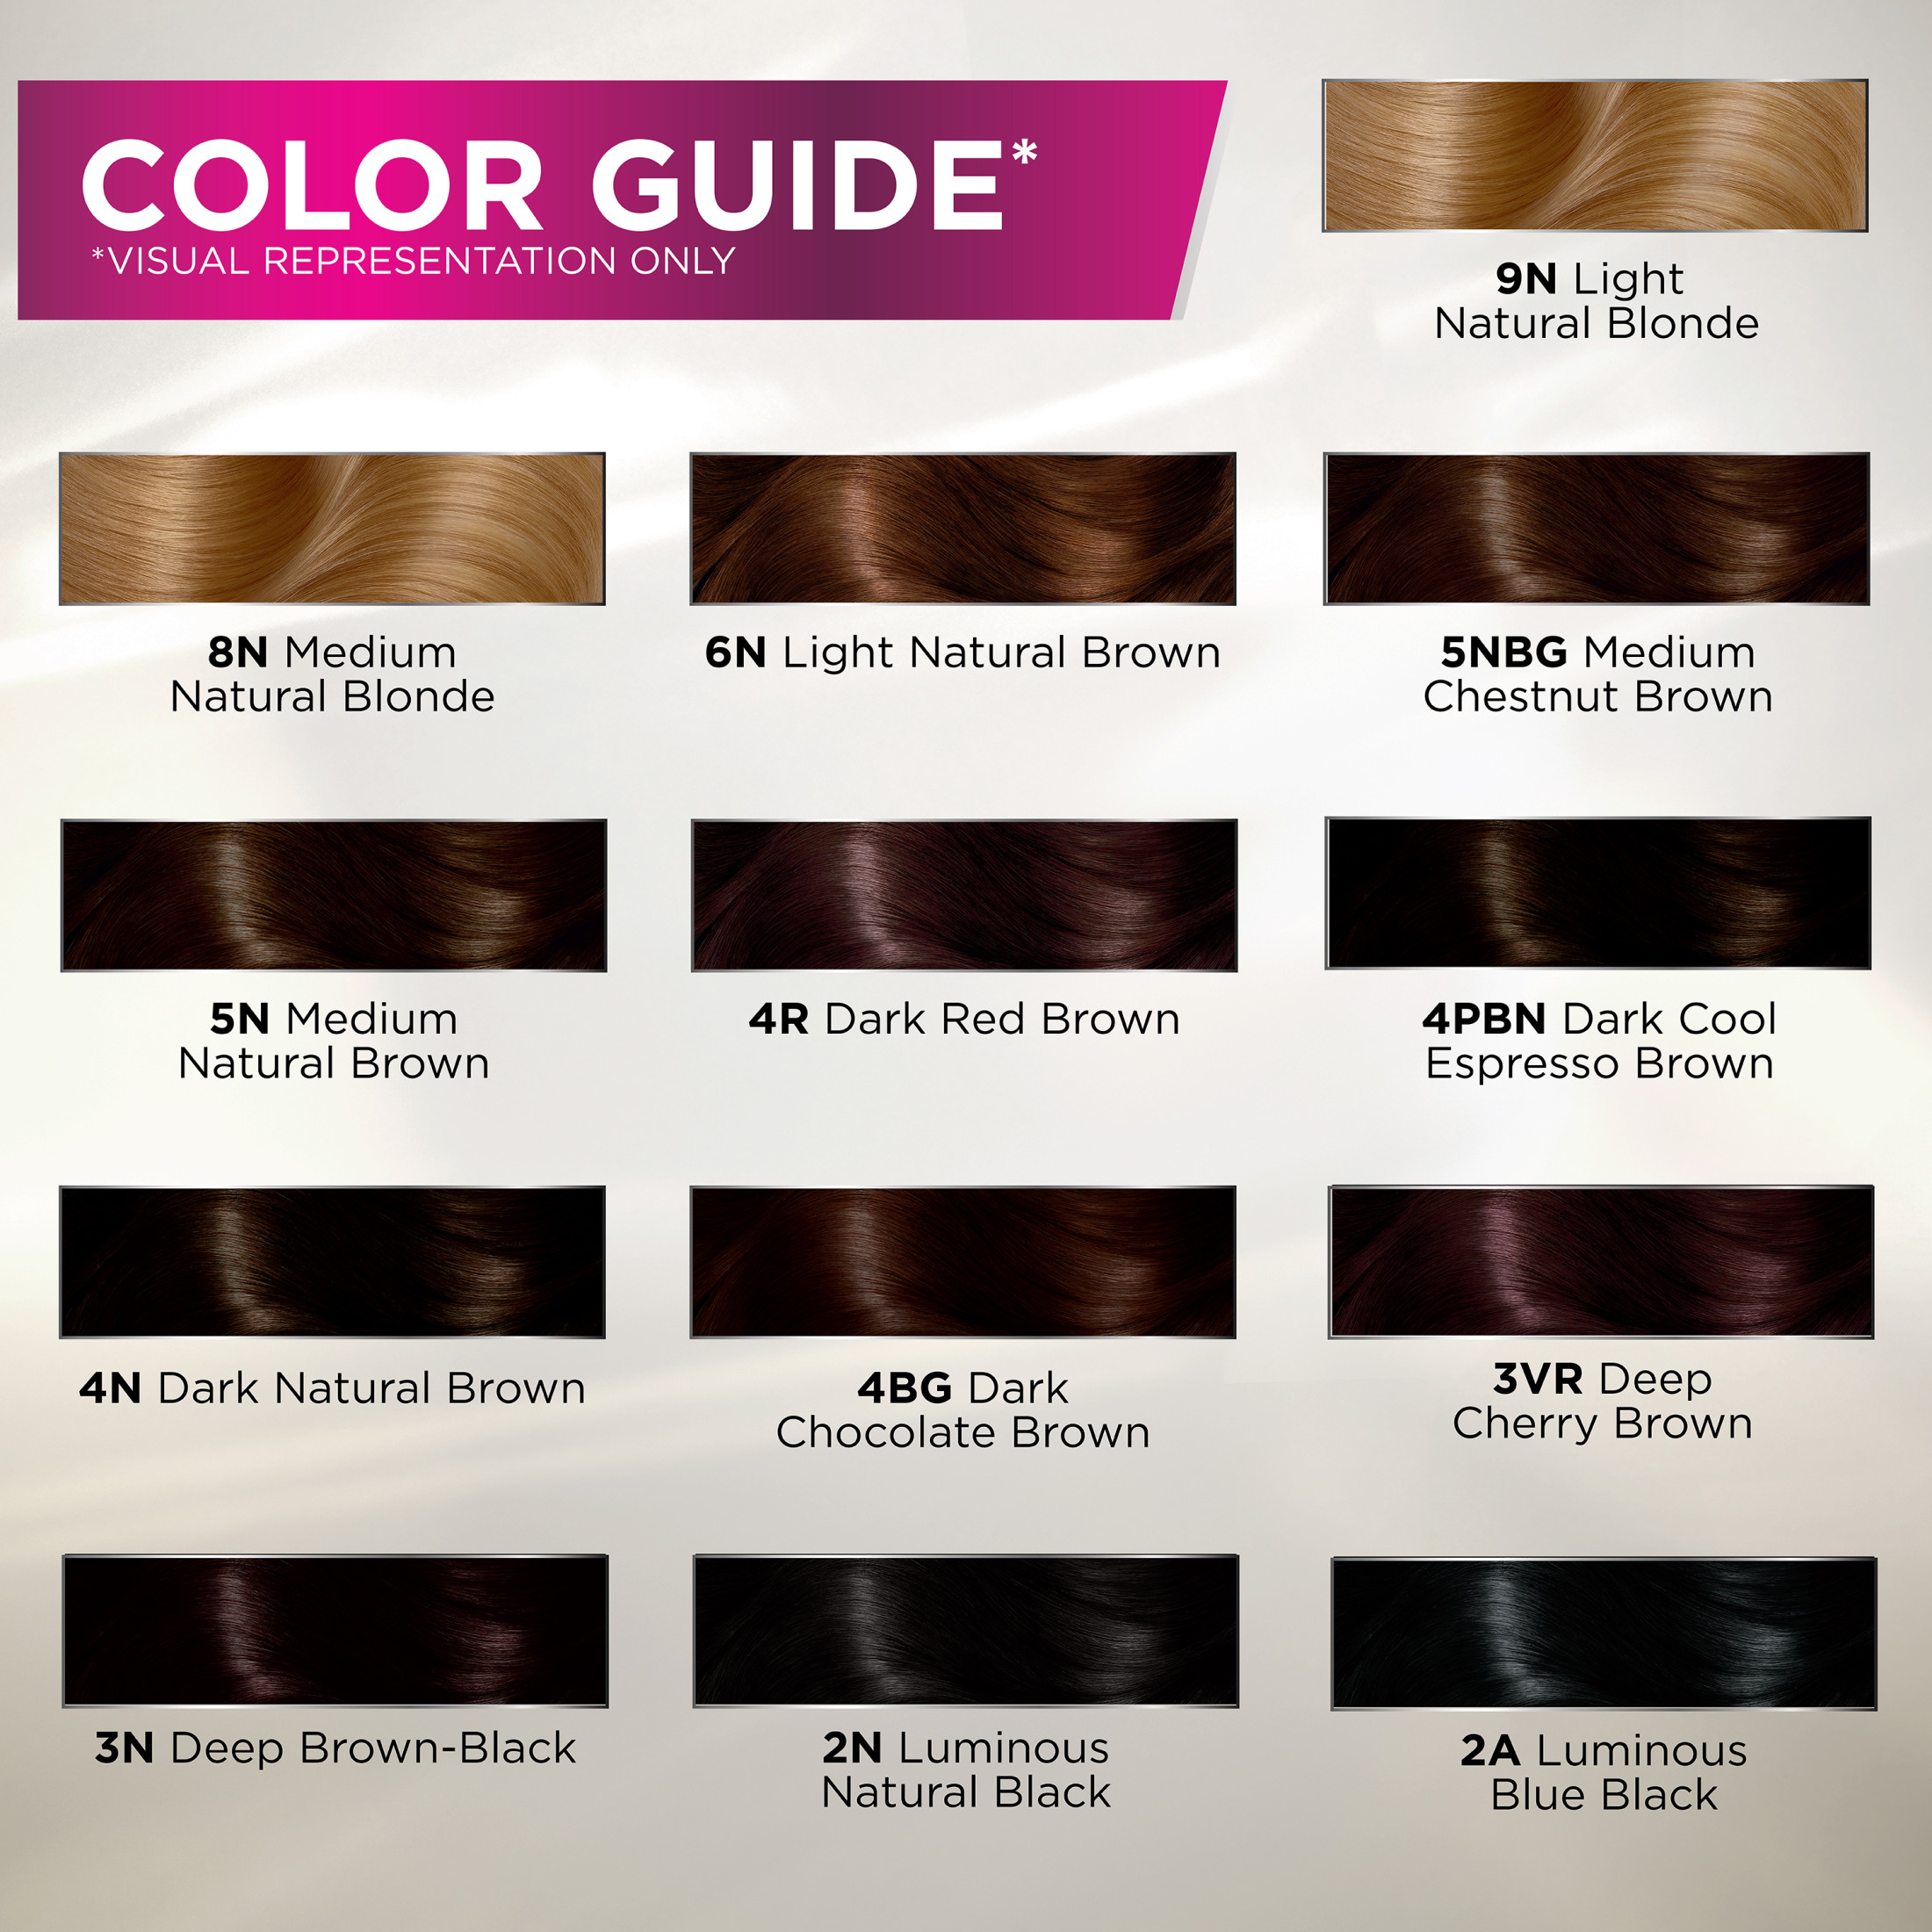 John Frieda Precision Foam Hair Color Kit, Brown Hair Dye, 5NBG Medium Chestnut Brown Hair Color, 1 Application - image 4 of 10